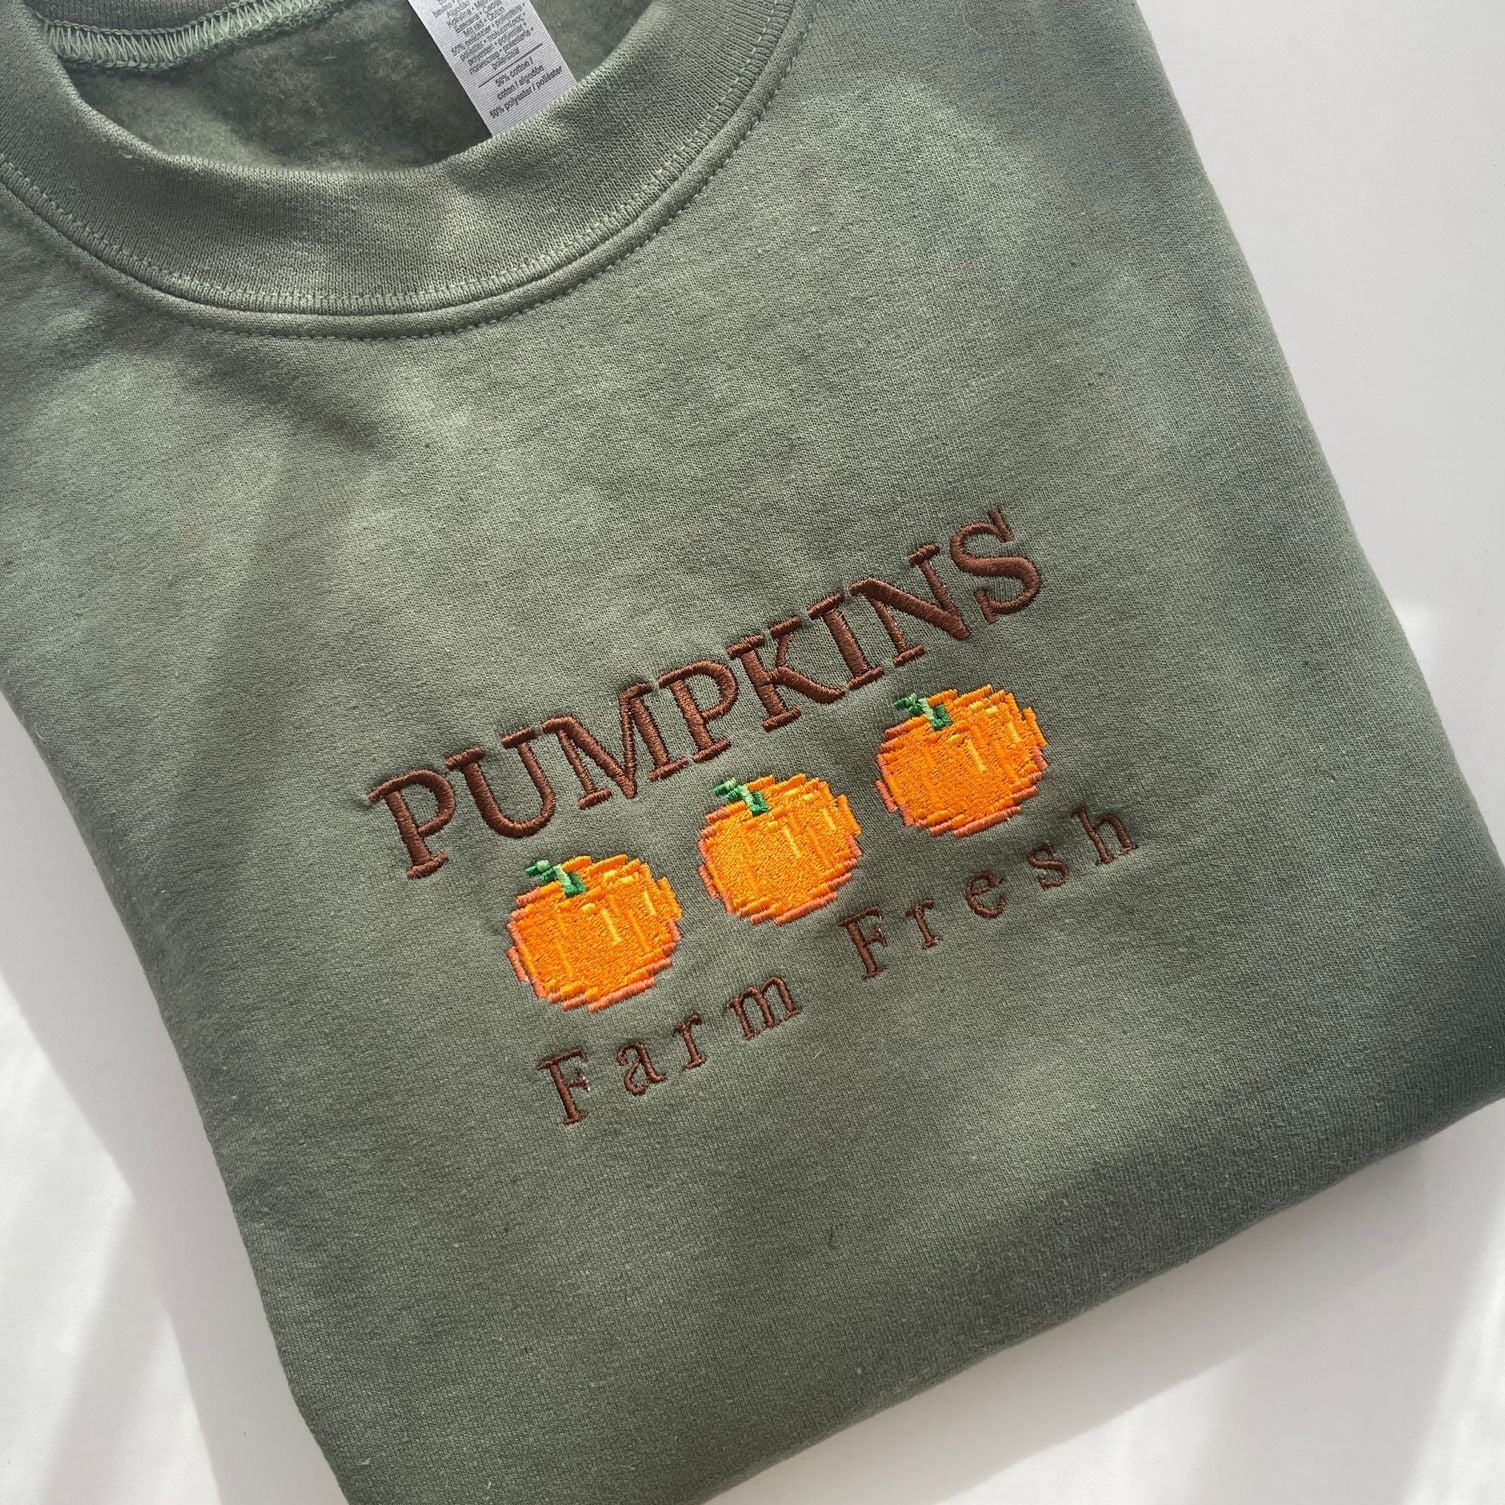 Farm Fresh Pumpkins Sublimation Sweatshirt With Pumpkins on 